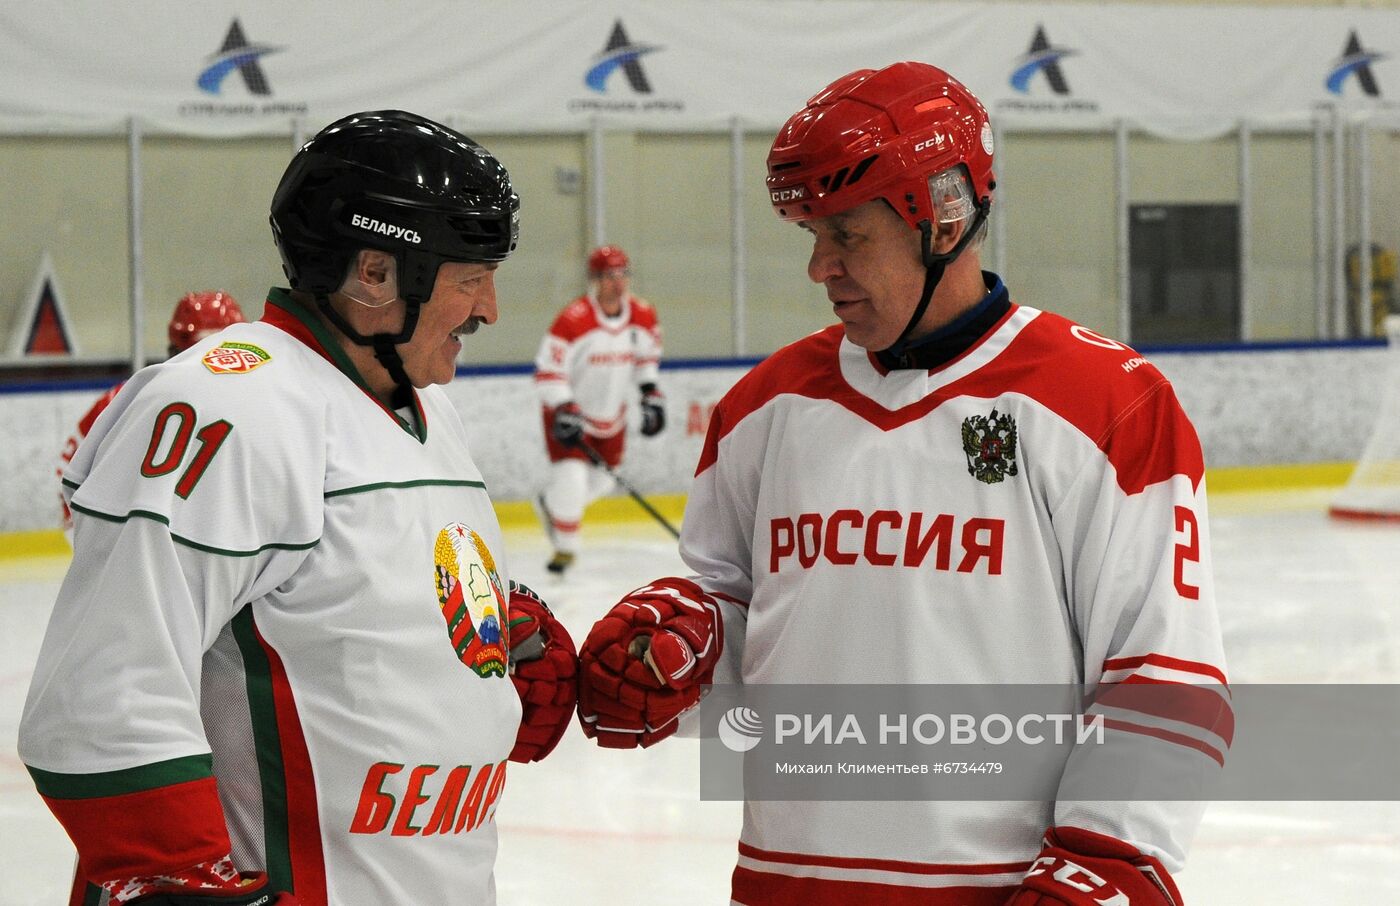 Президент РФ В. Путин и президент Белоруссии А. Лукашенко приняли участие в хоккейном матче